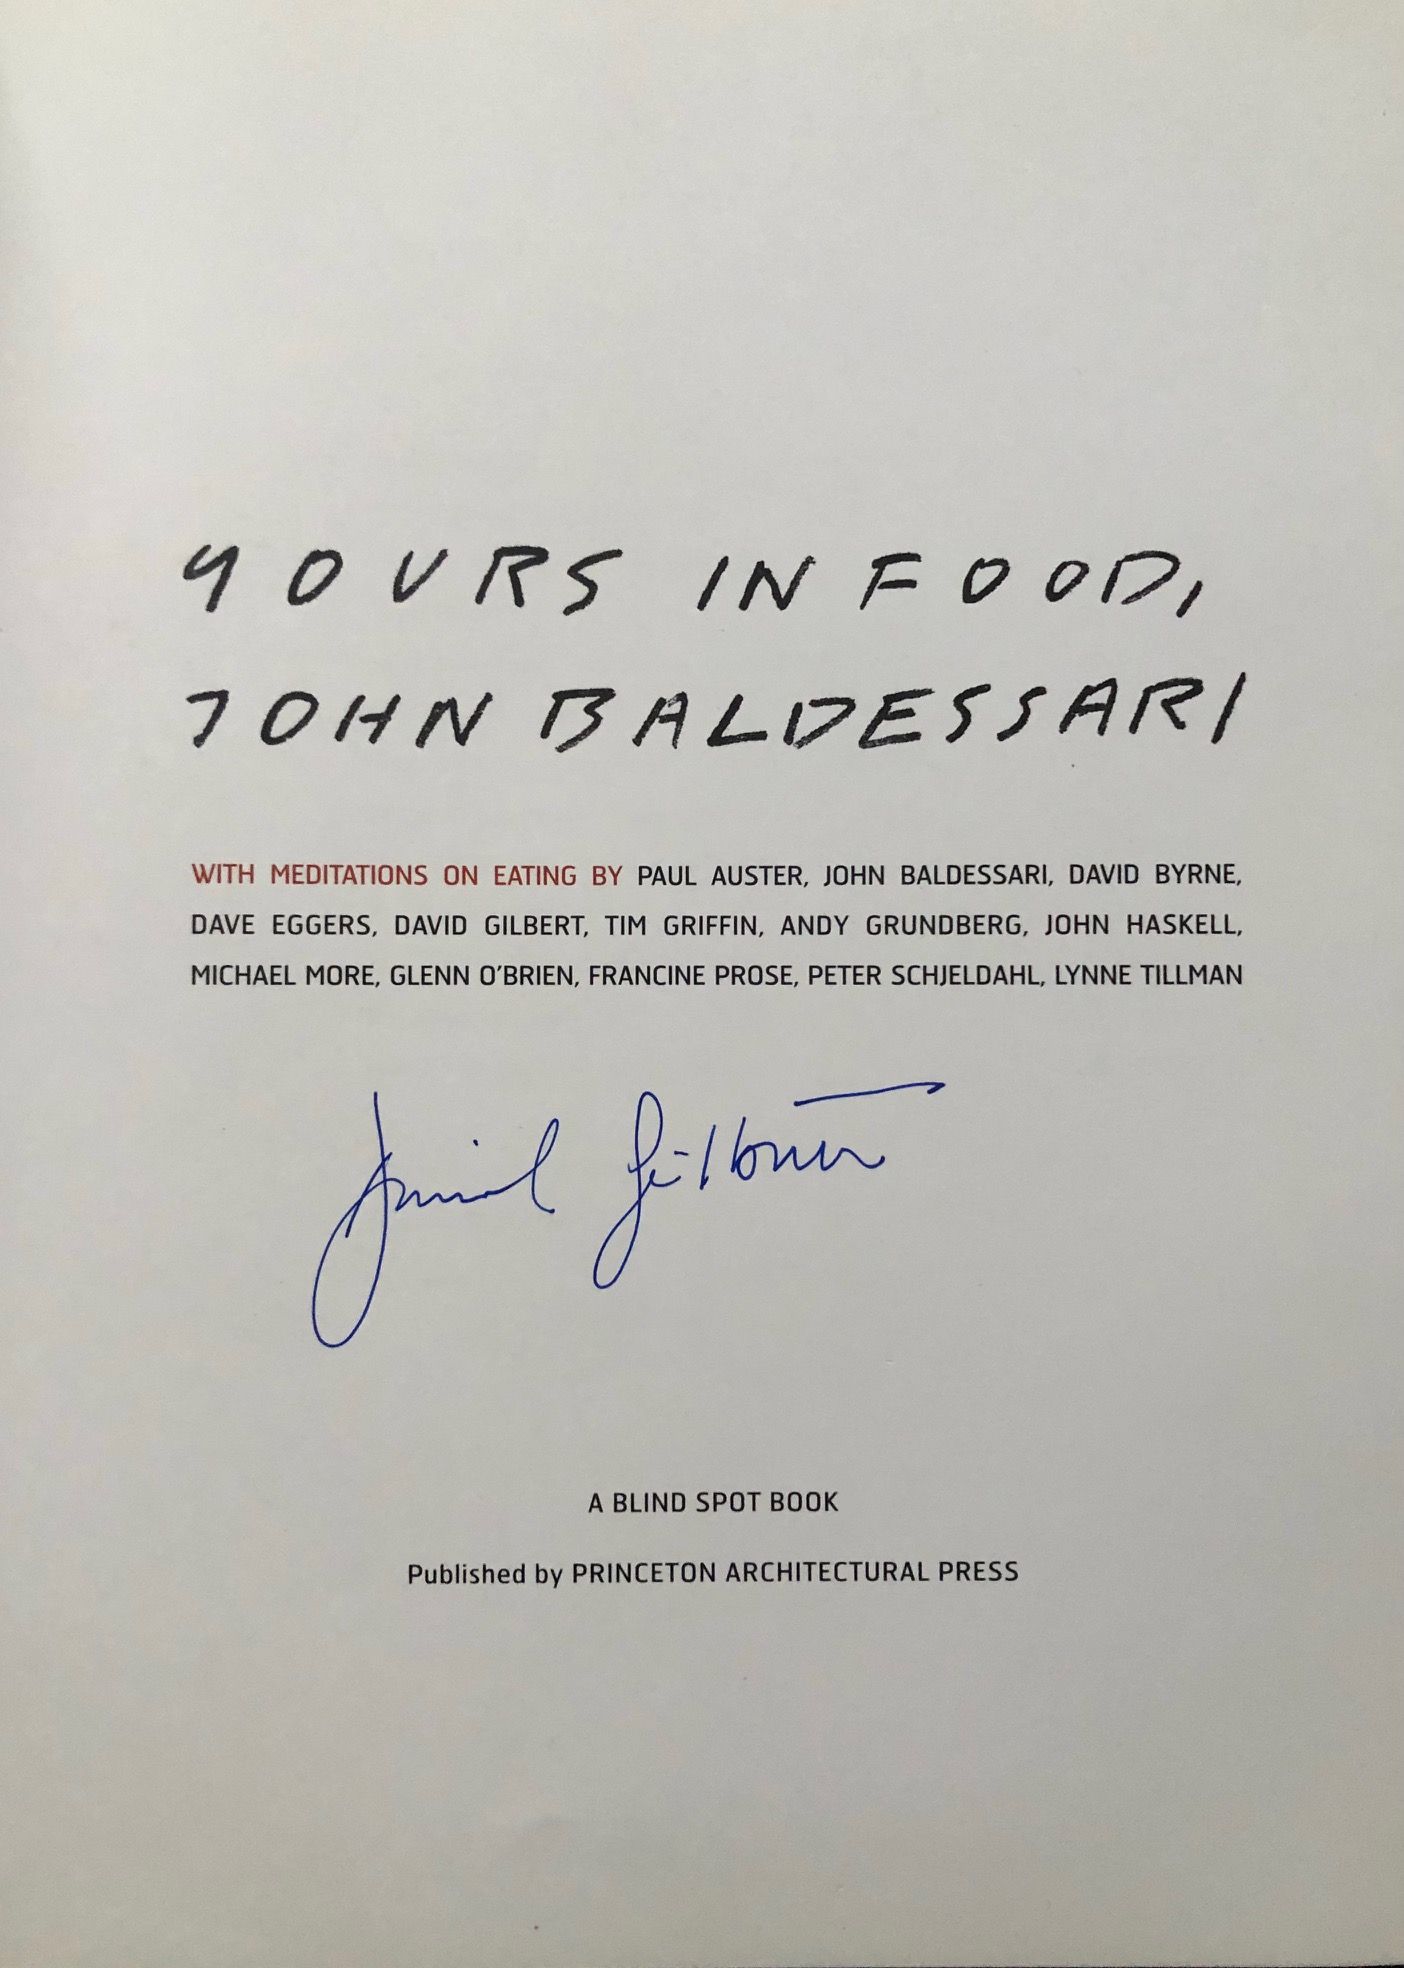 (*NEW ARRIVAL*) (Art) John Baldessari. Yours in Food, John Baldessari